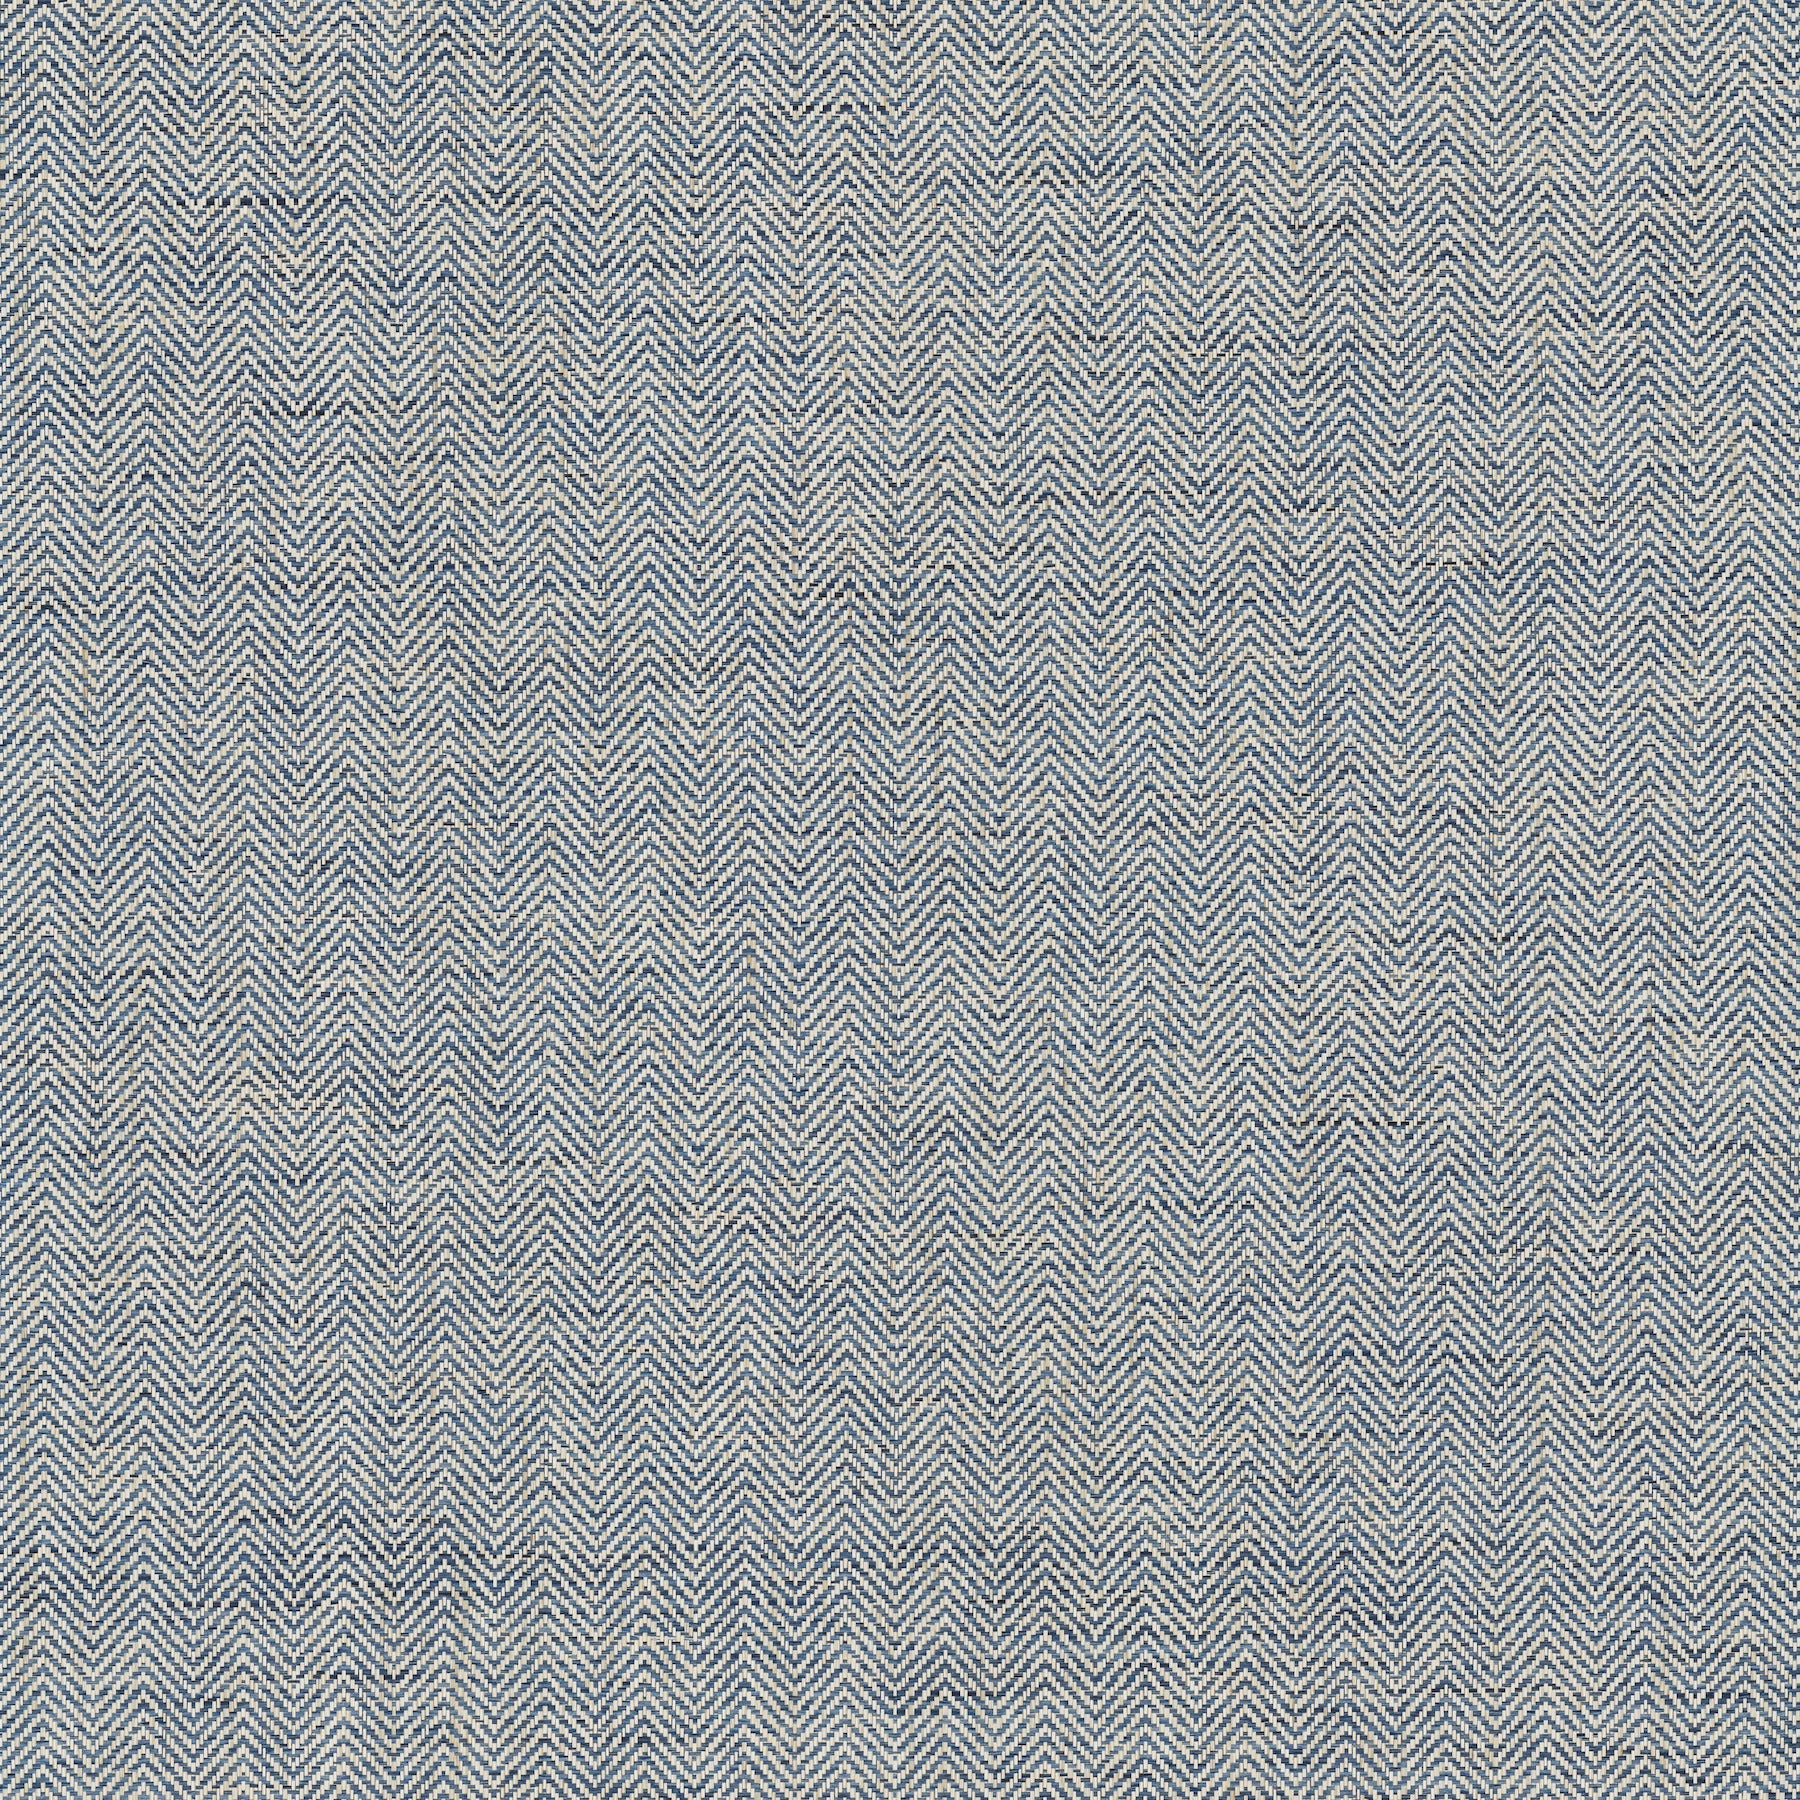 Tailored Weave Wallpaper Wallpaper Ronald Redding Designs Yard Blue 